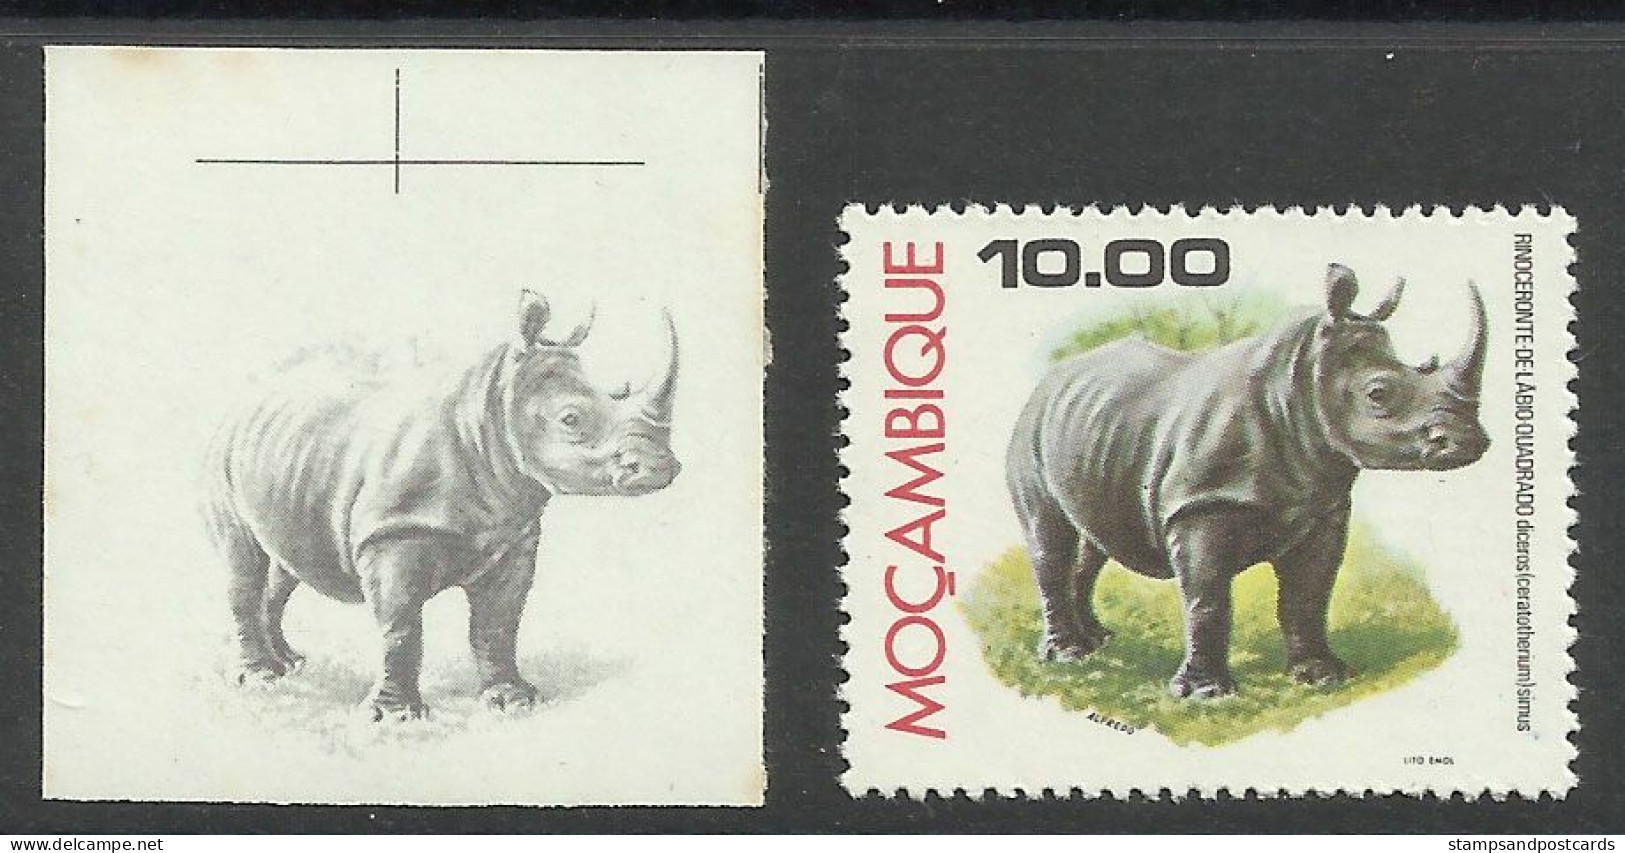 Mozambique 1976 Preuve De Couleur Rhinocéros Moçambique 1976 Color Proof Rhino Rhinocerus - Rinocerontes